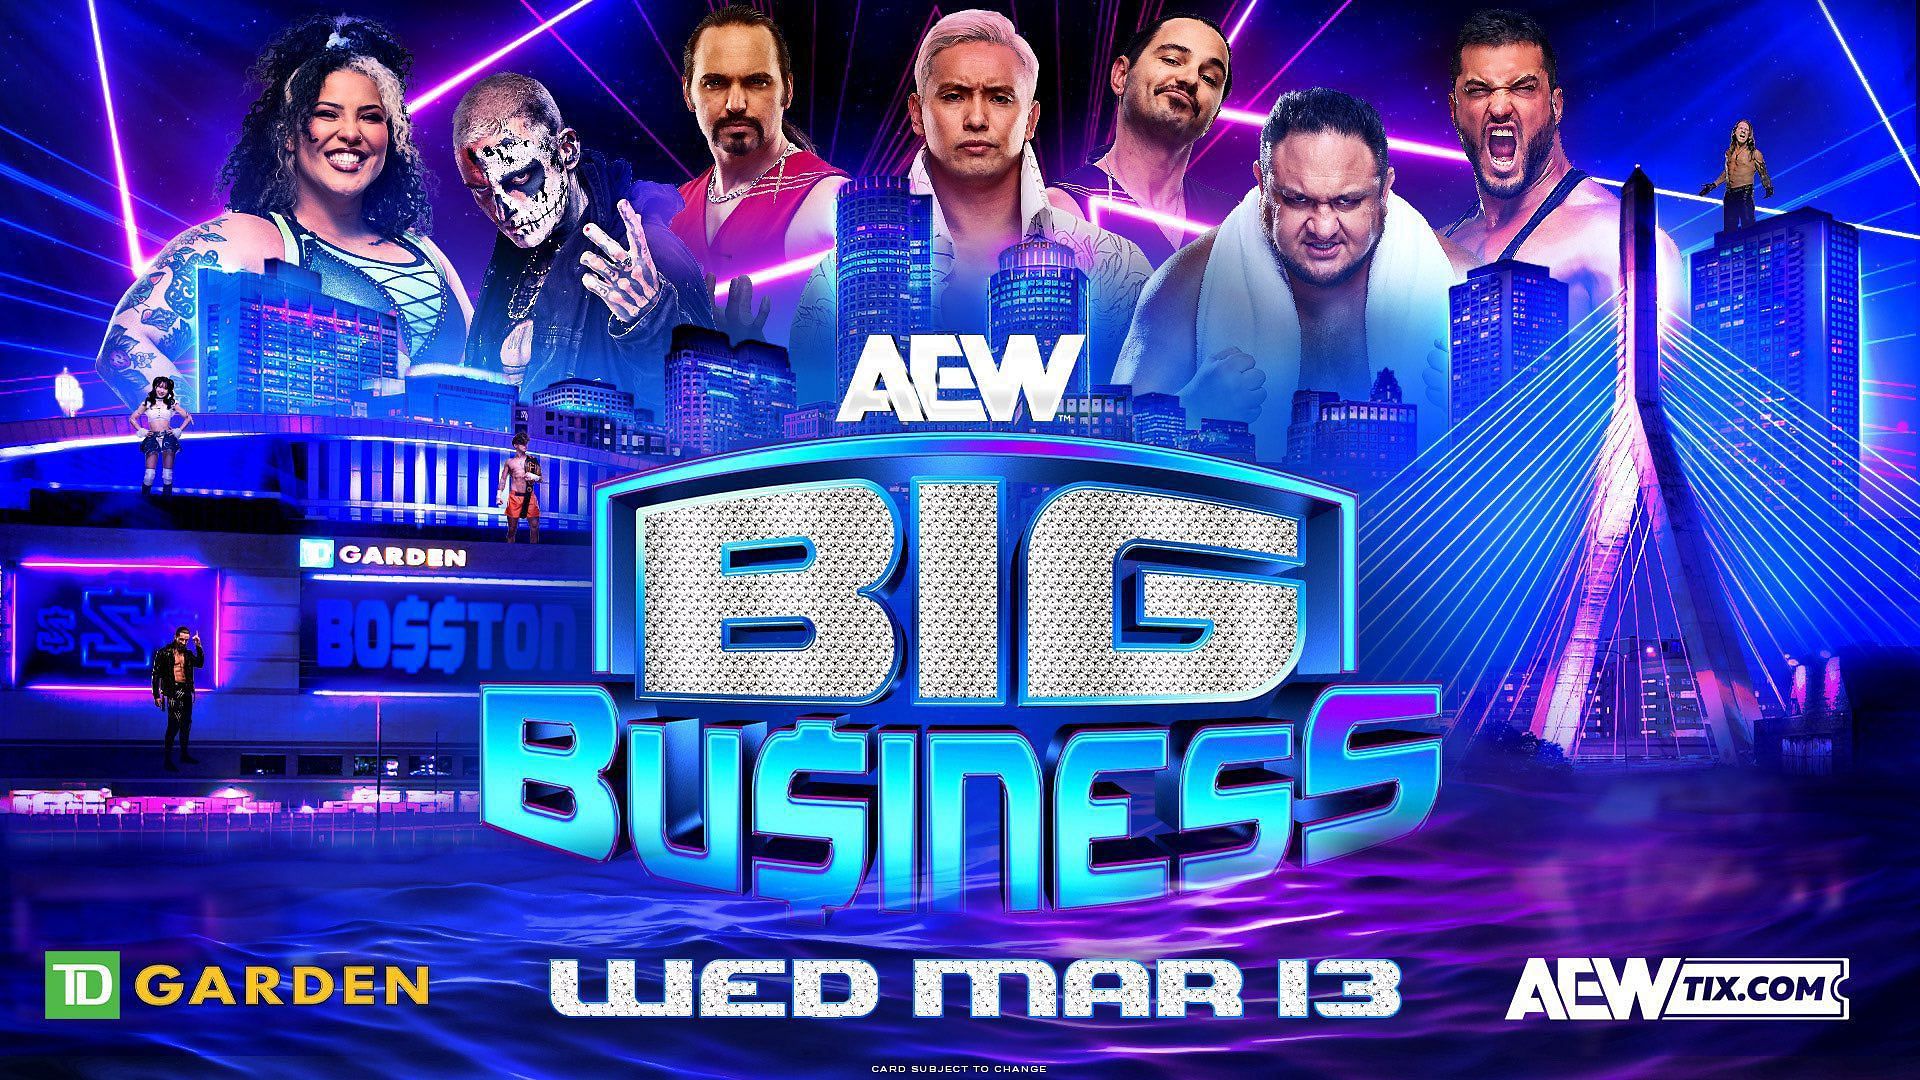 AEW Dynamite: Big Business airs tomorrow night on TBS